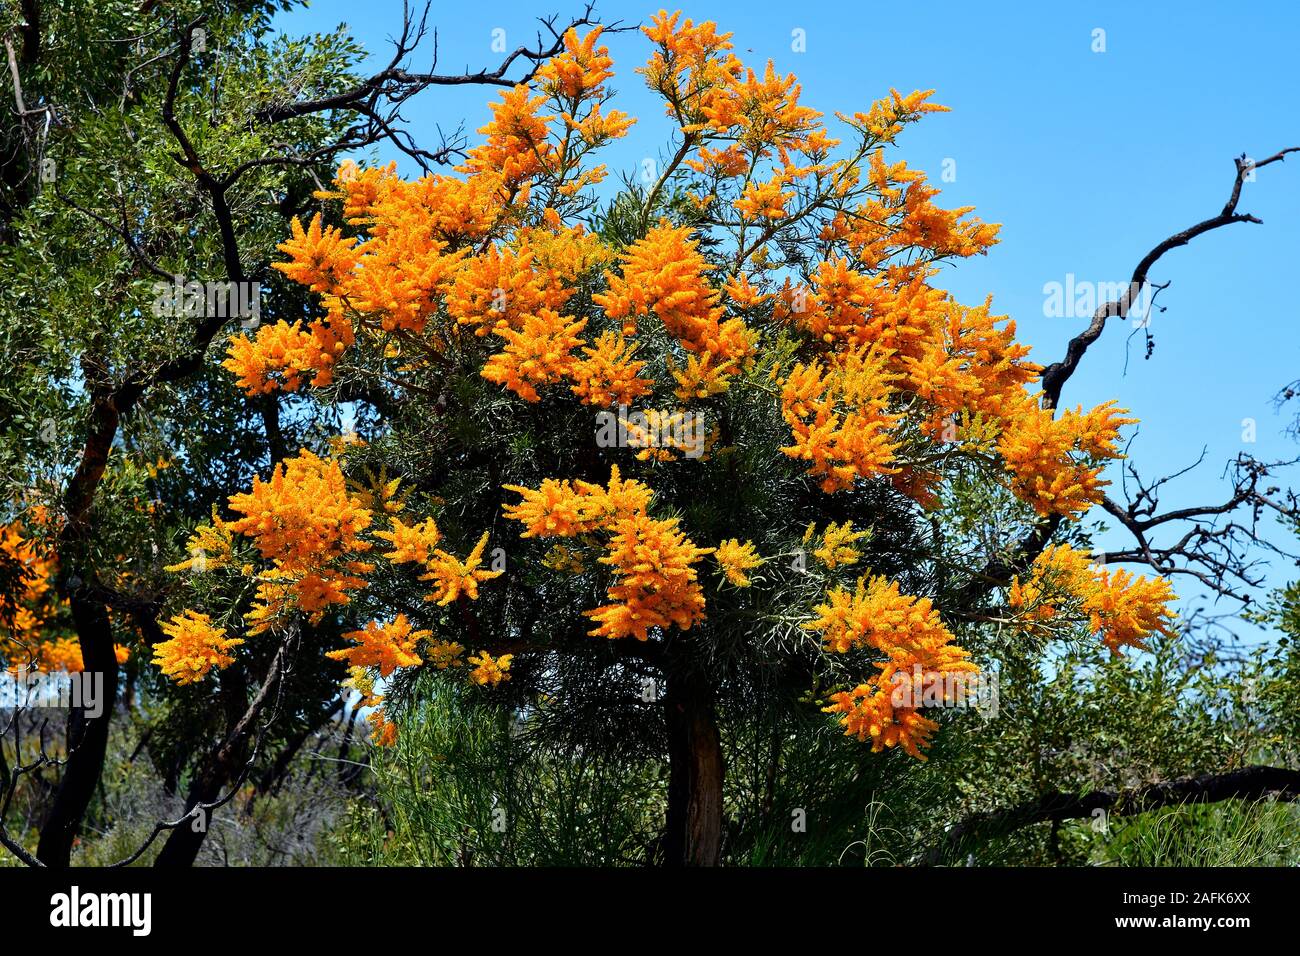 Australia, Nuytsia floribunda aka Western Australian Christmas Tree Stock Photo